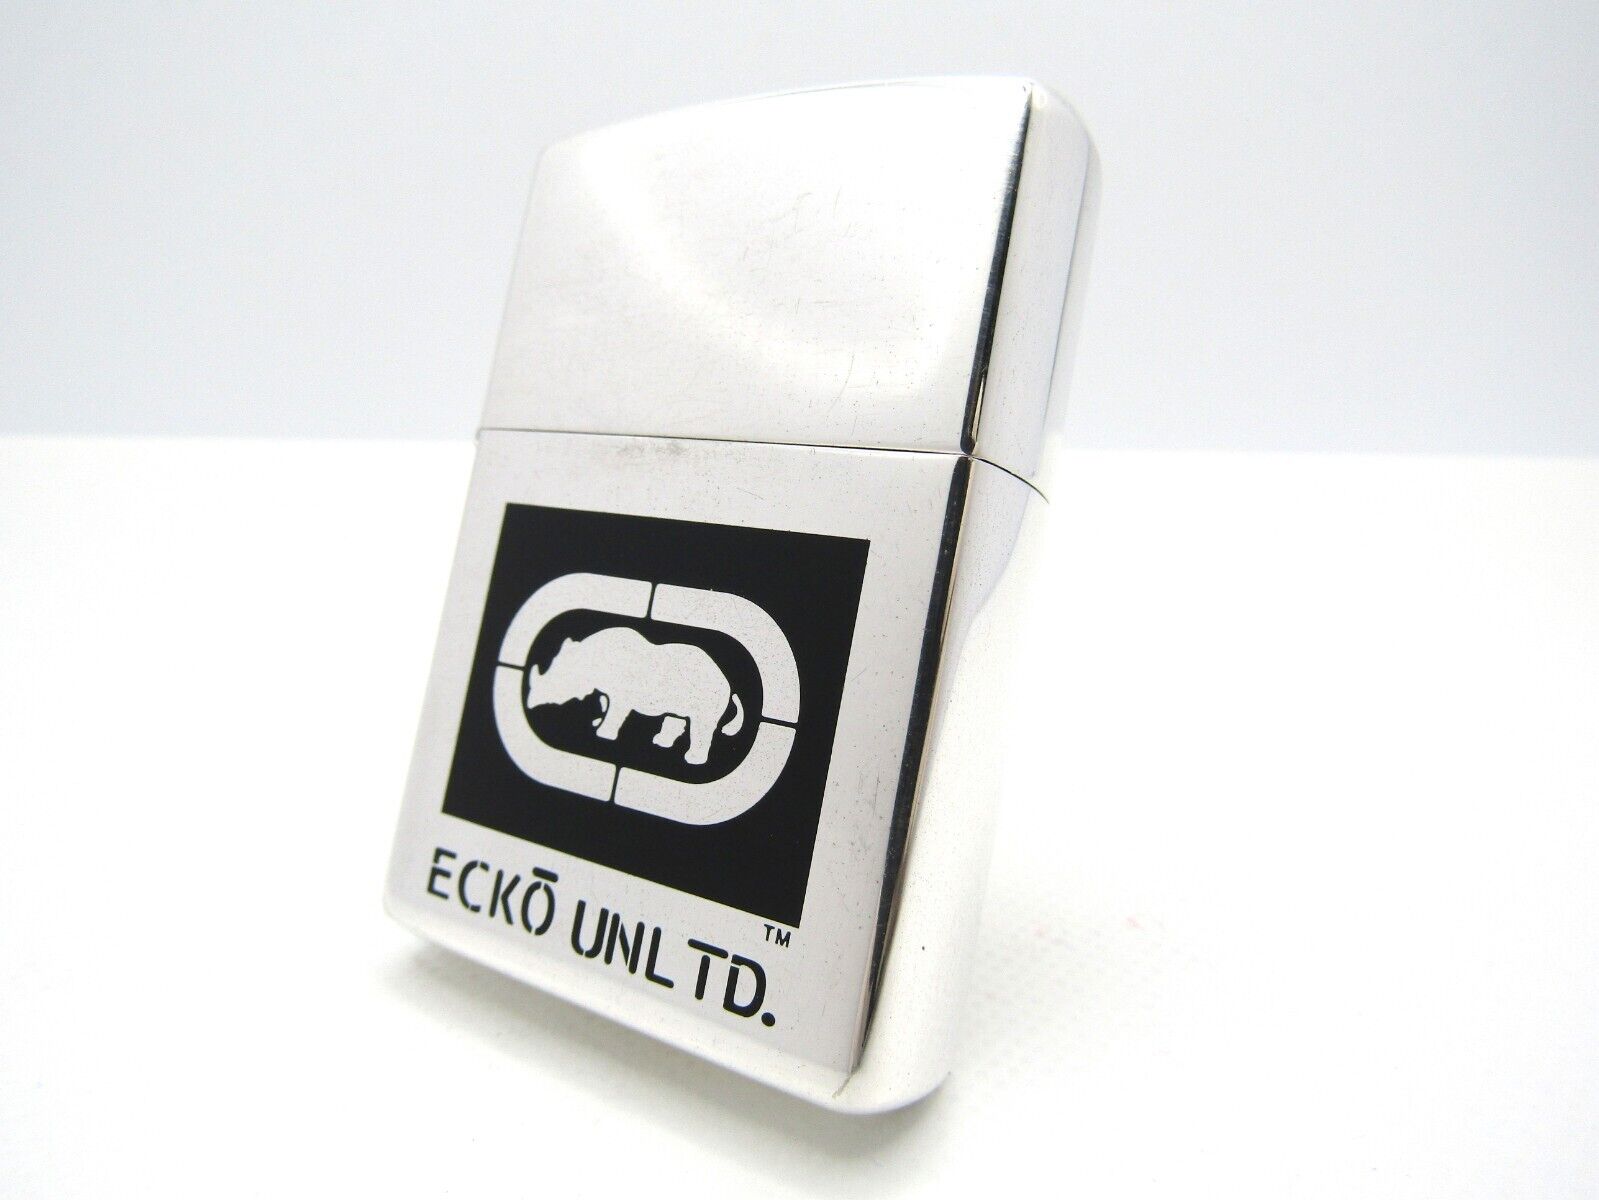 Ecko Unlimited Unltd ZIPPO 2001 Fired Rare